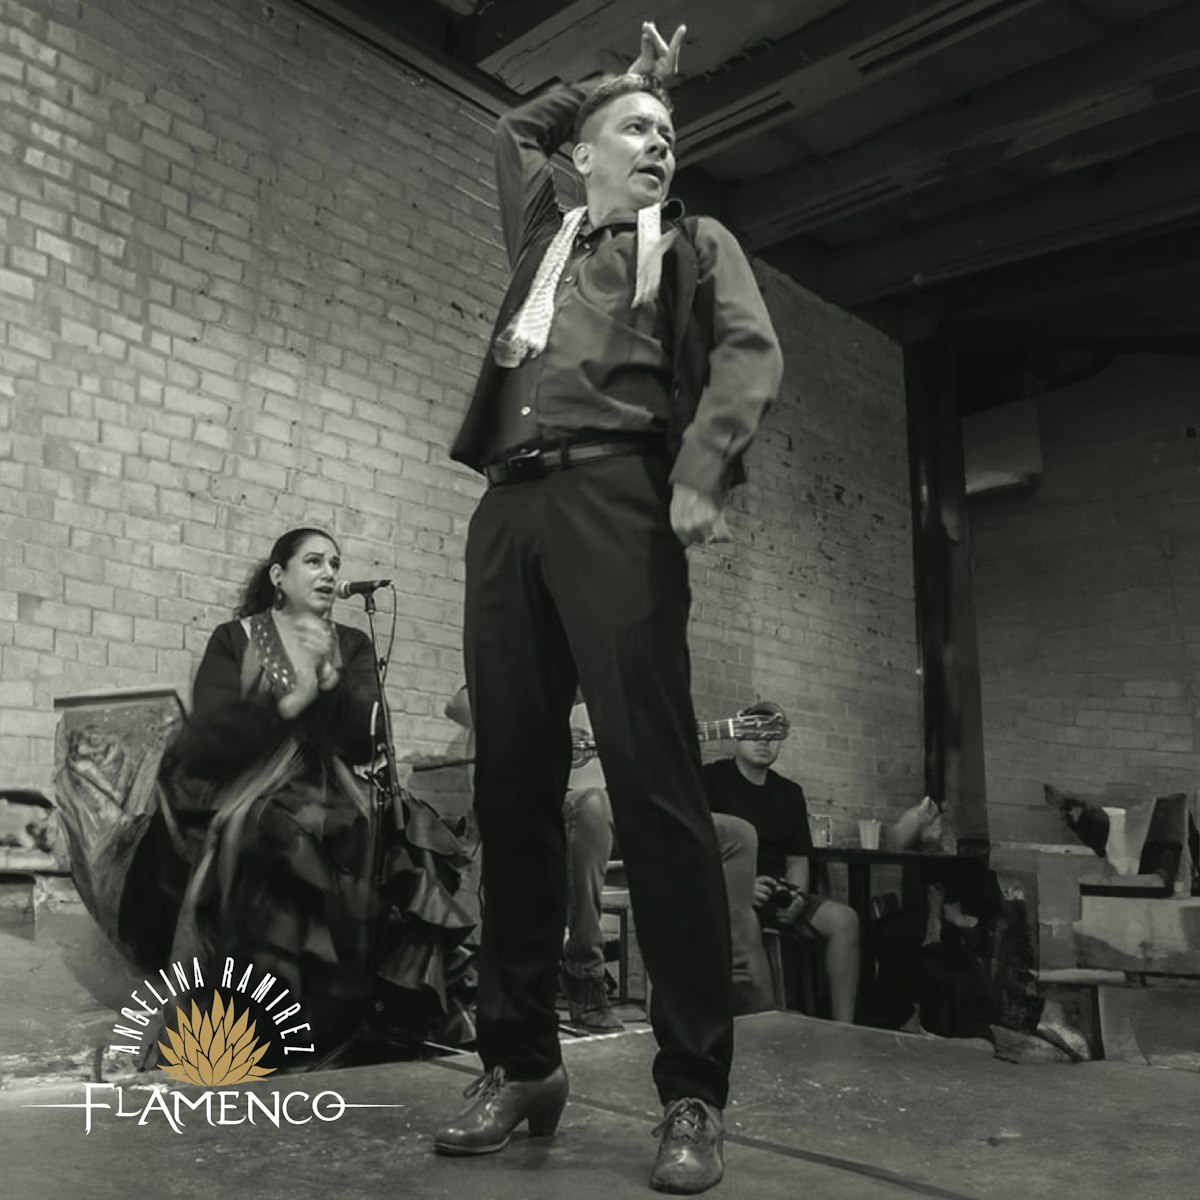 AR Flamenco Presents: Tablao Flamenco with special guest Martin Gaxiola